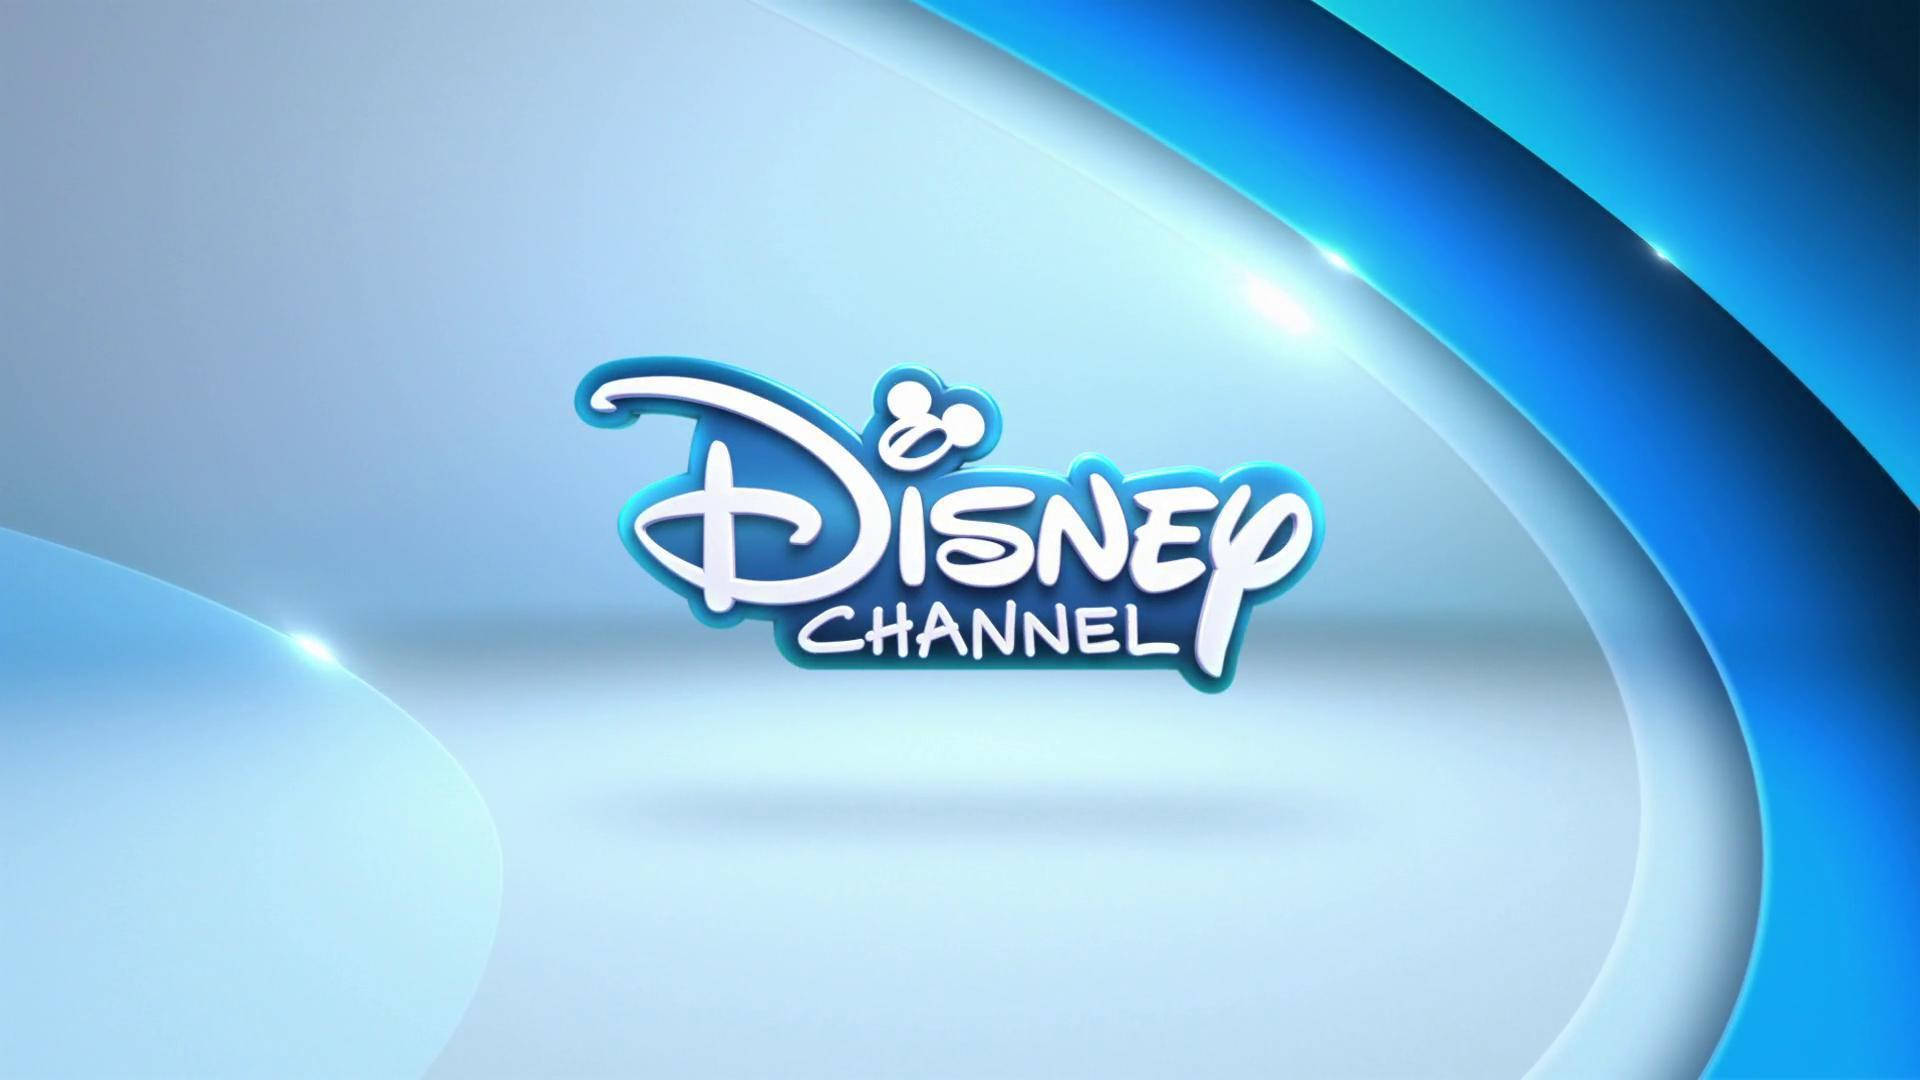 Disneyxd Altes Logo In Blau Wallpaper